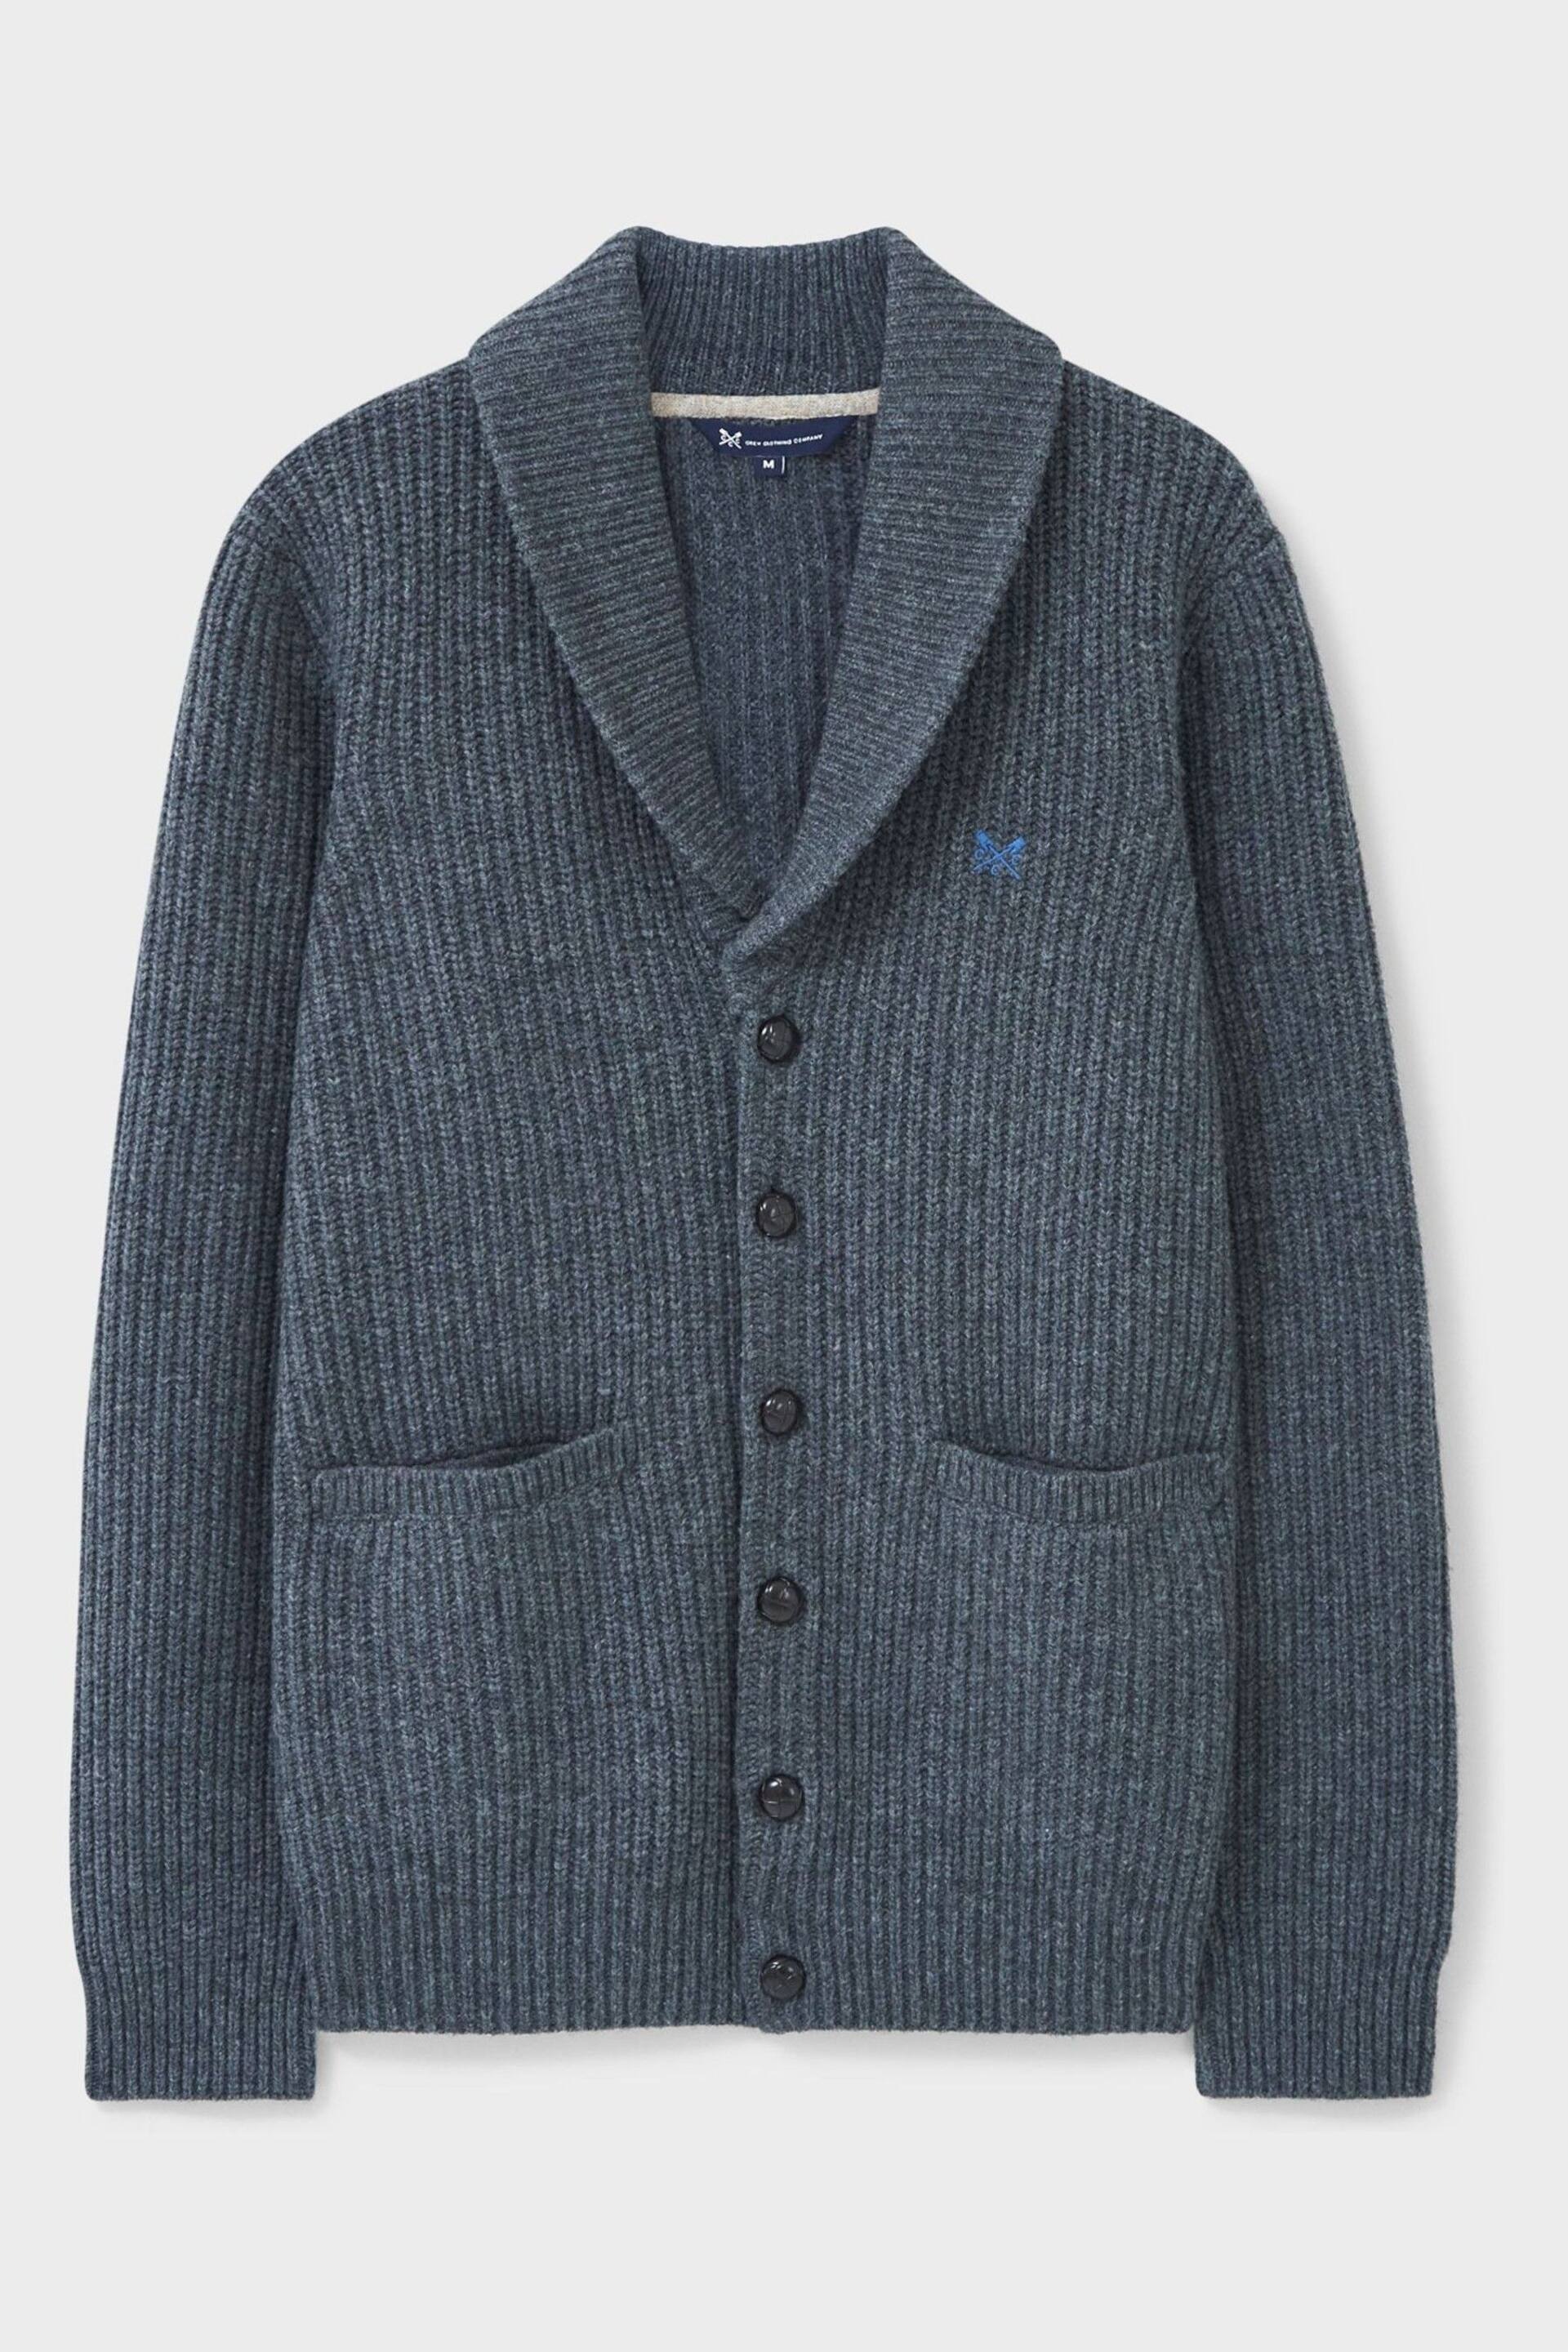 Crew Clothing Company Grey Wool Classic Cardigan - Image 5 of 5